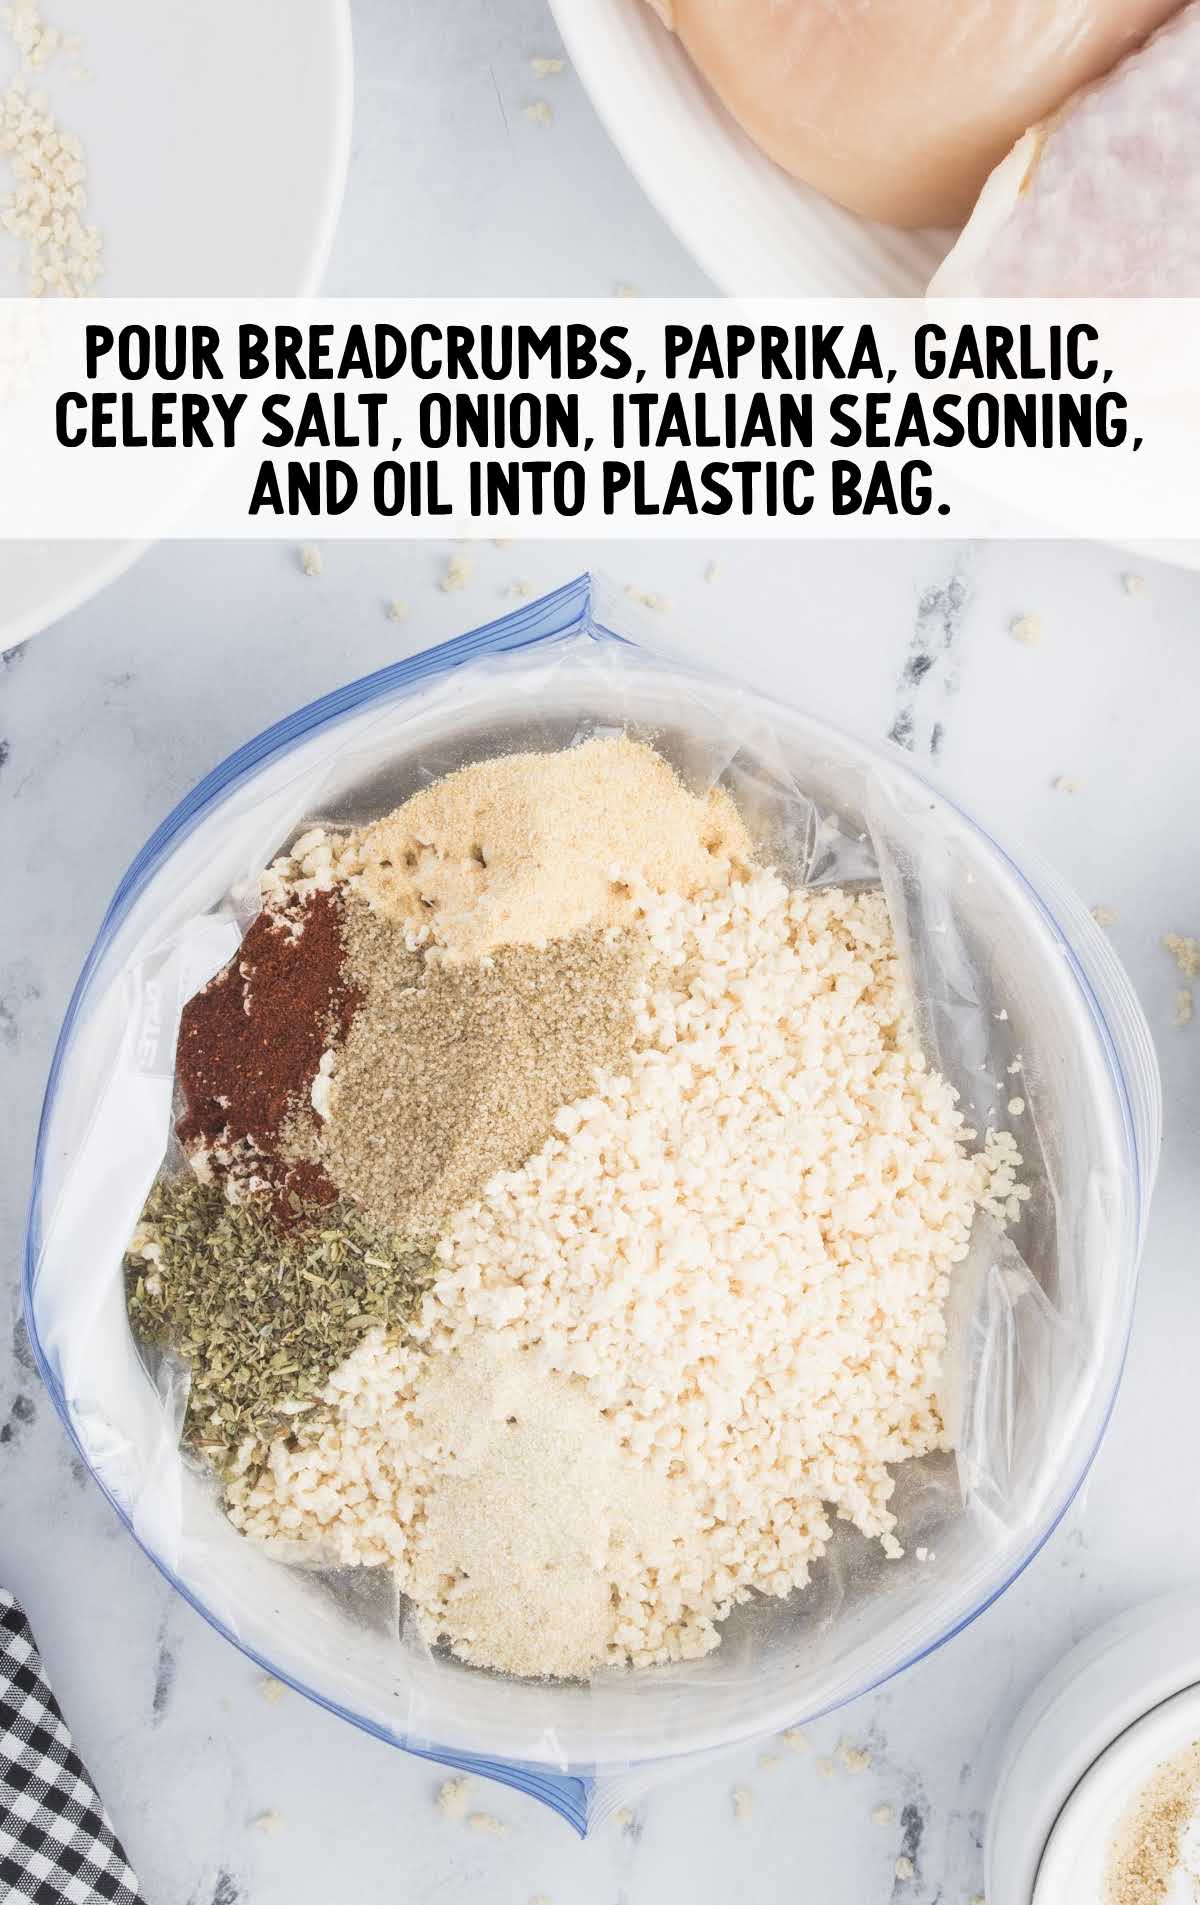 breadcrumbs, paprika, garlic, celery salt, onion, Italian seasoning, oil poured into a plastic bag